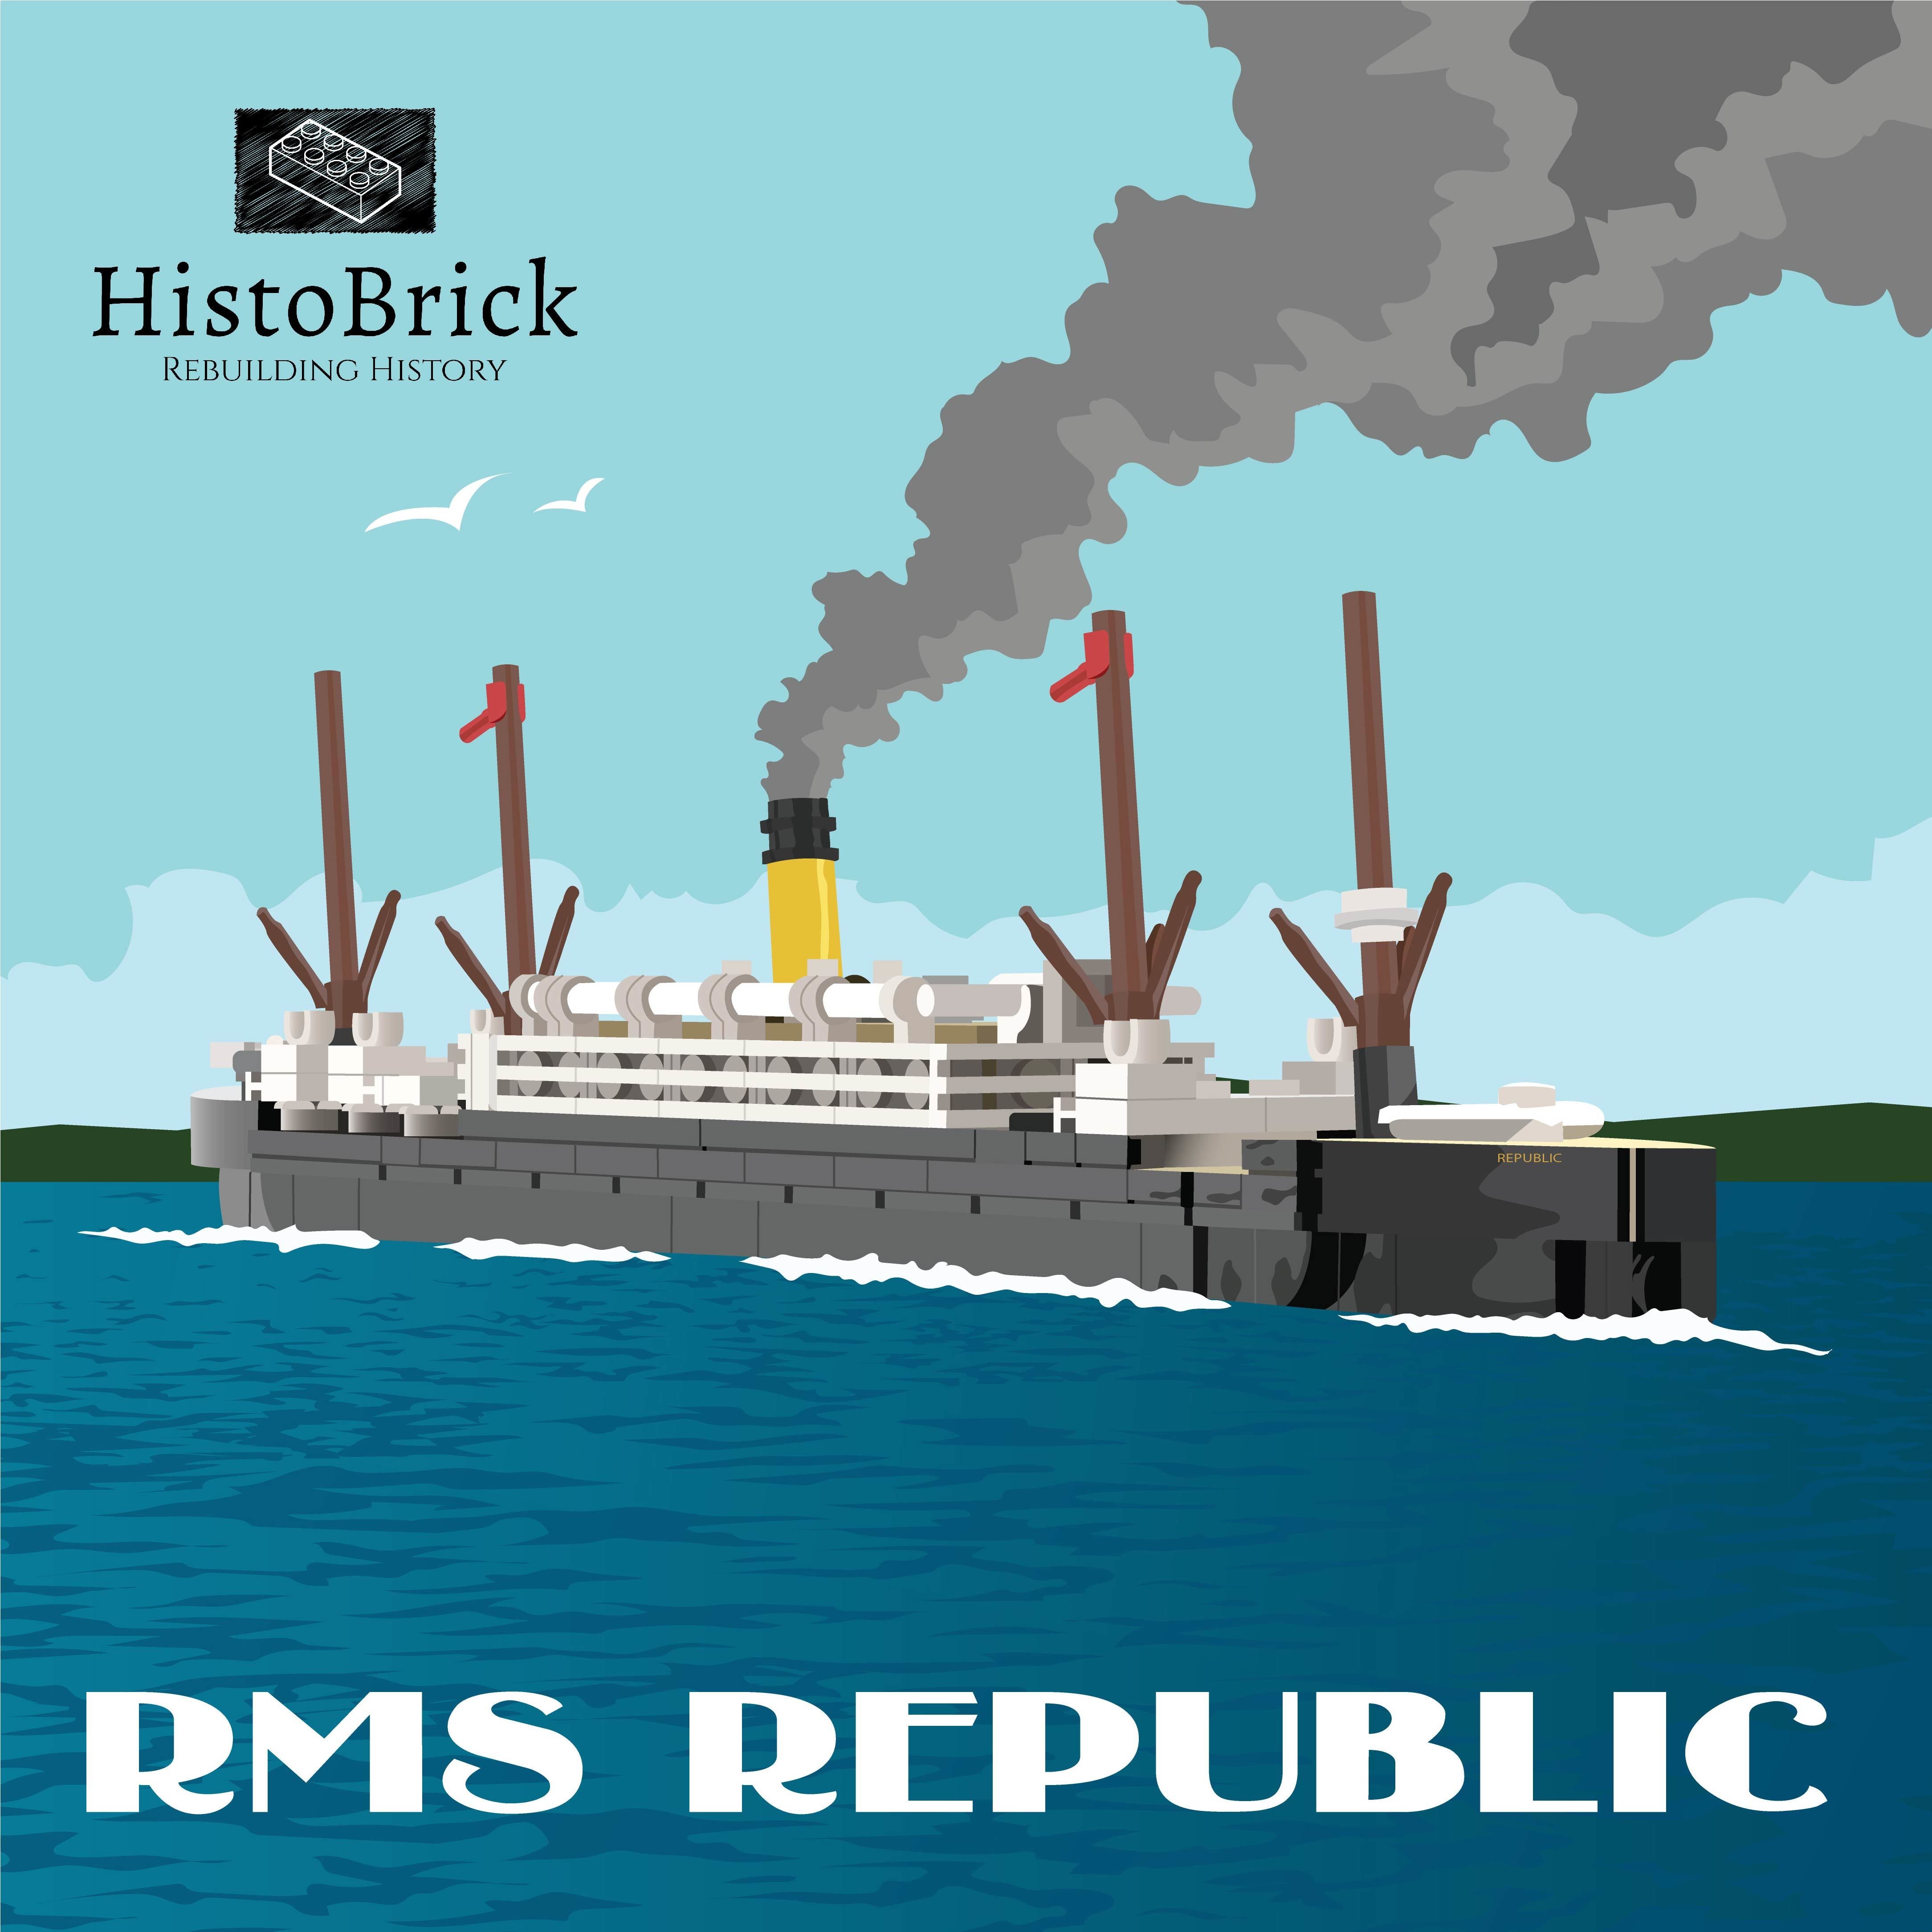 RMS Republic